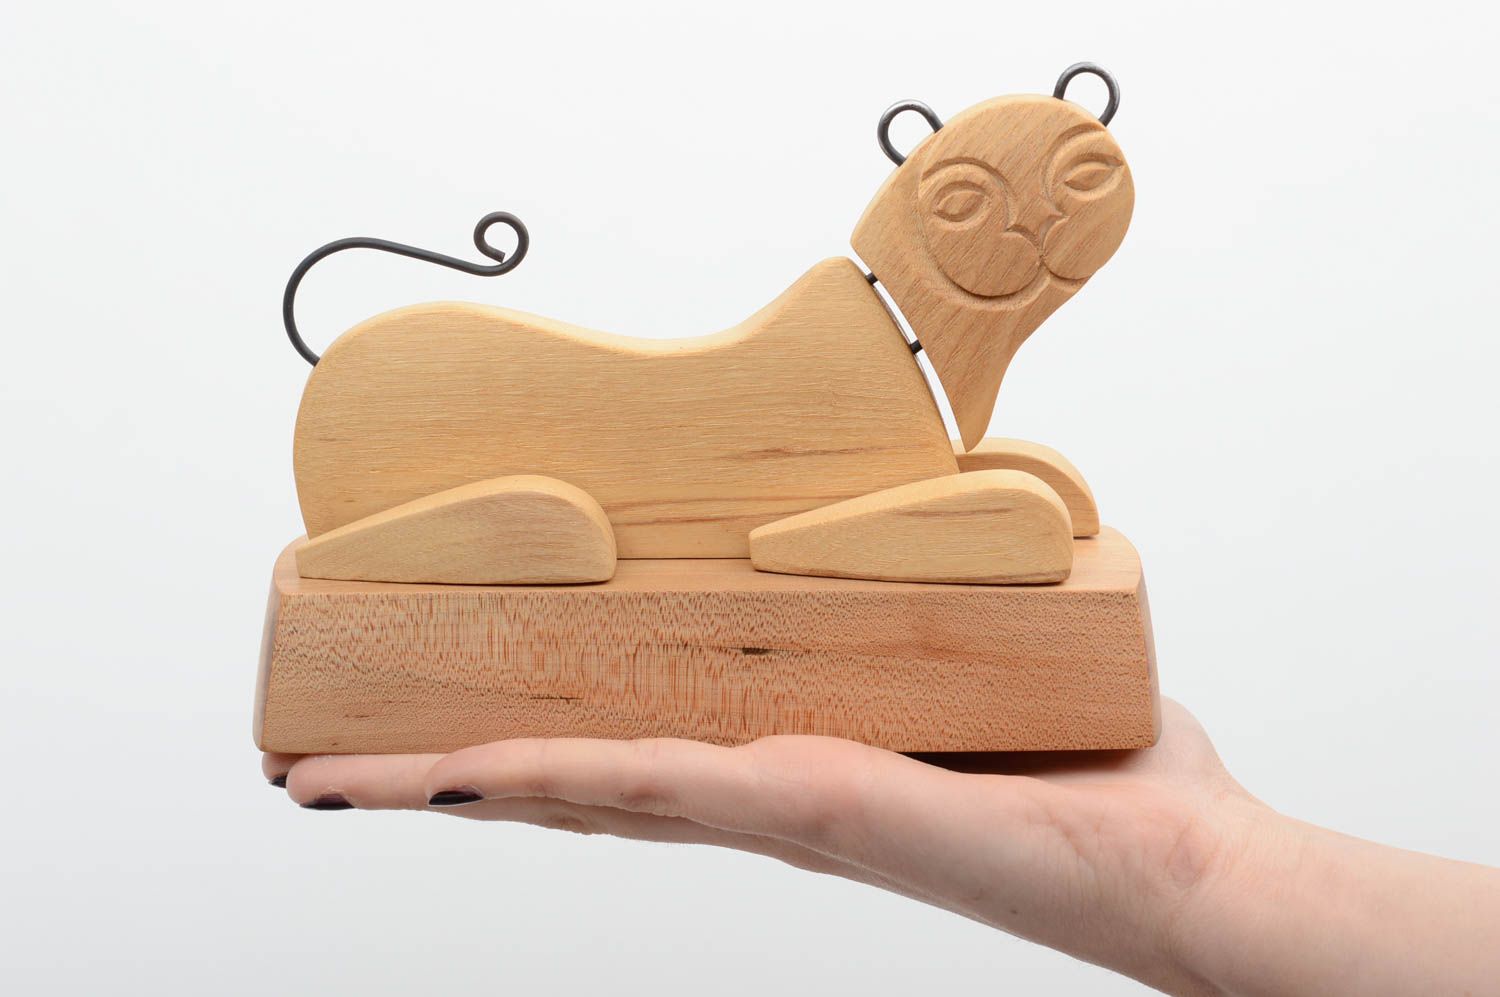 Handmade wood sculpture wooden gifts animal figurines souvenir ideas home decor photo 5